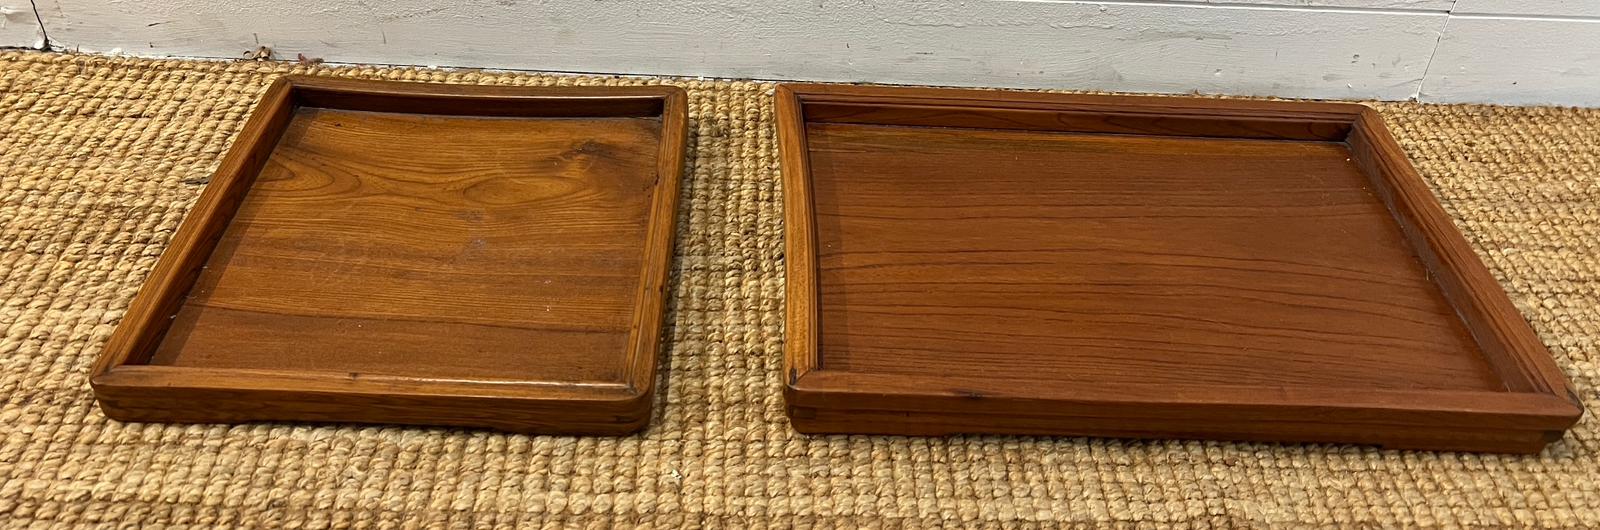 Two wooden oriental trays